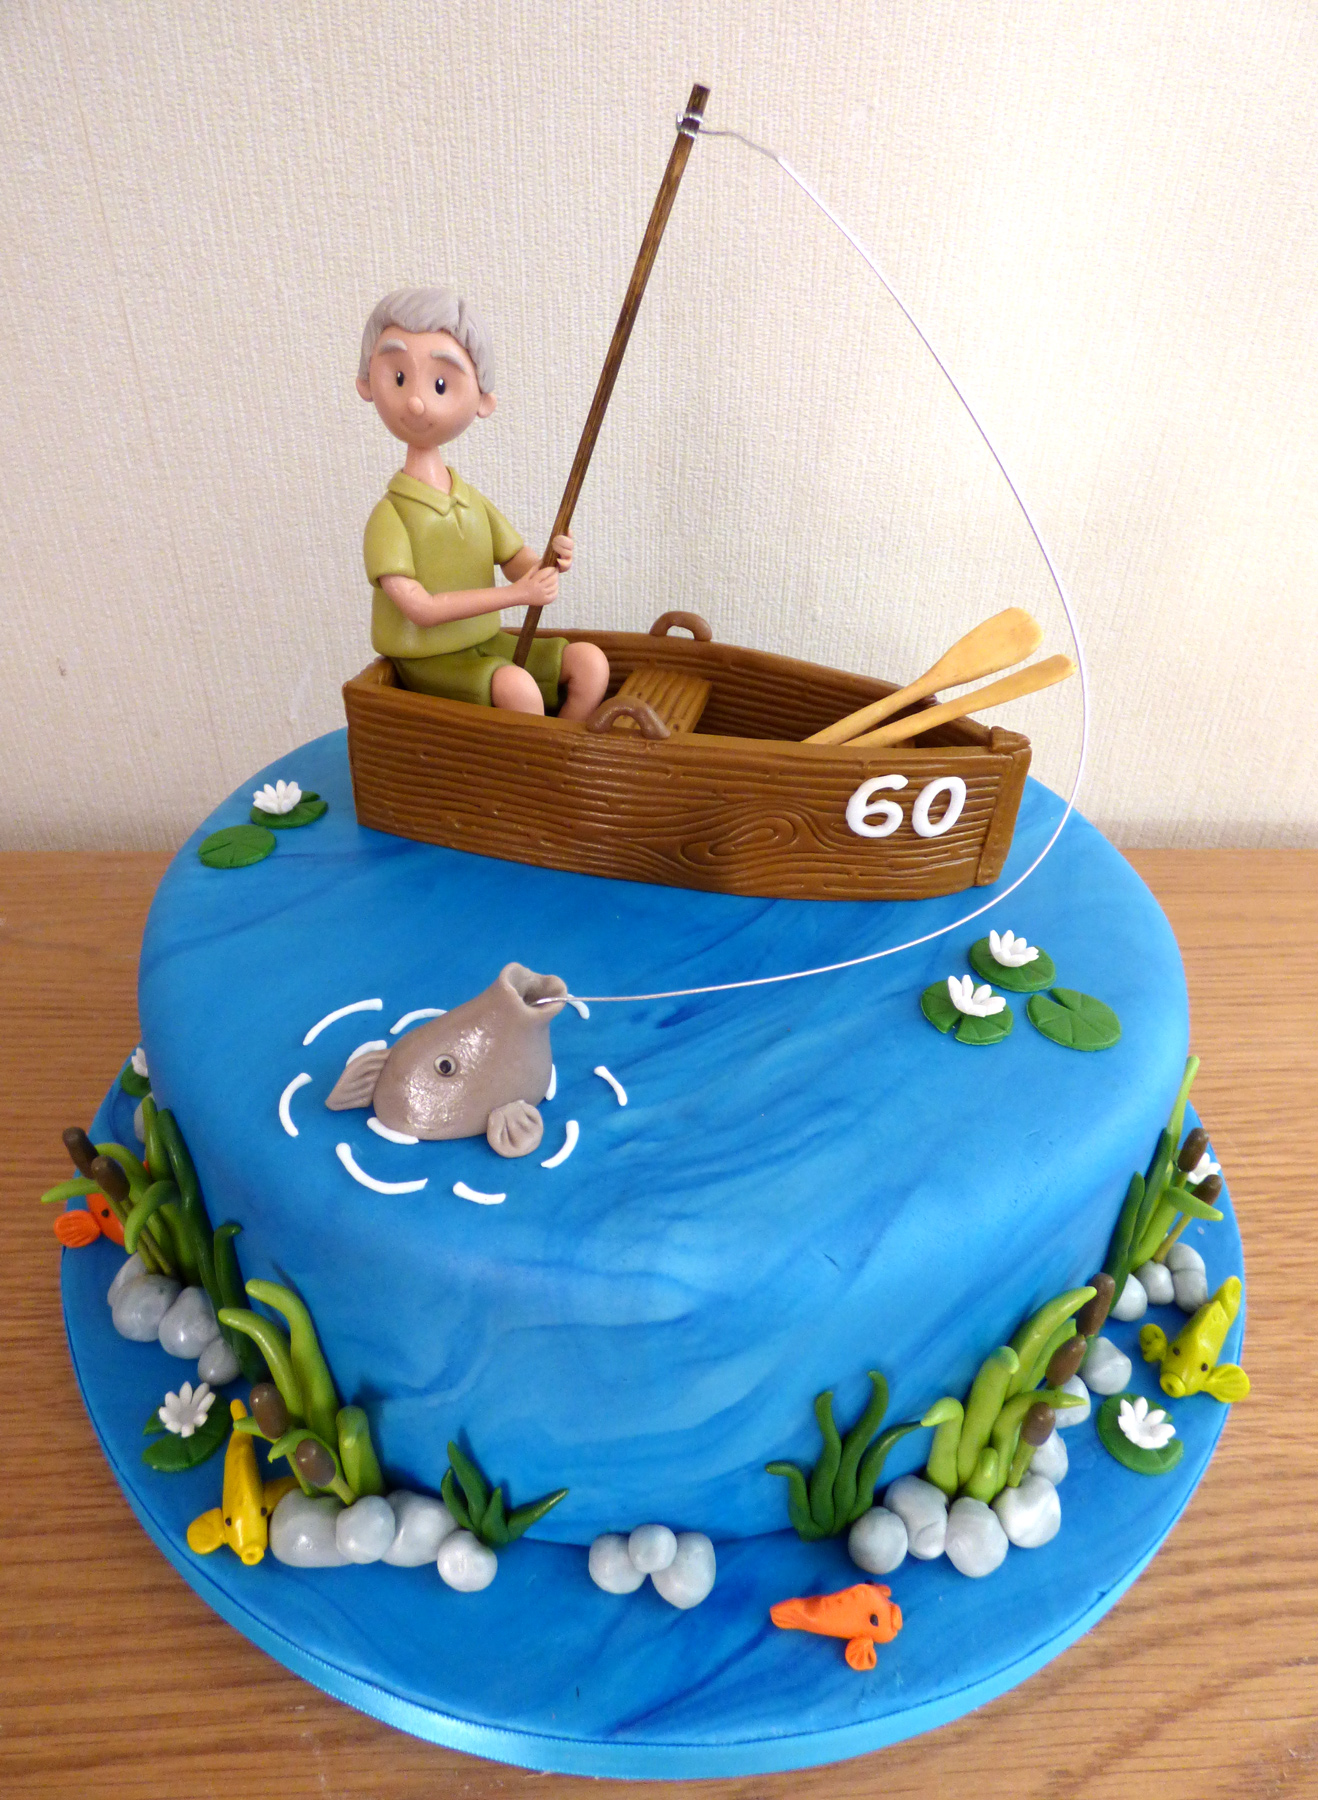 Gone Fishing' Birthday Cake